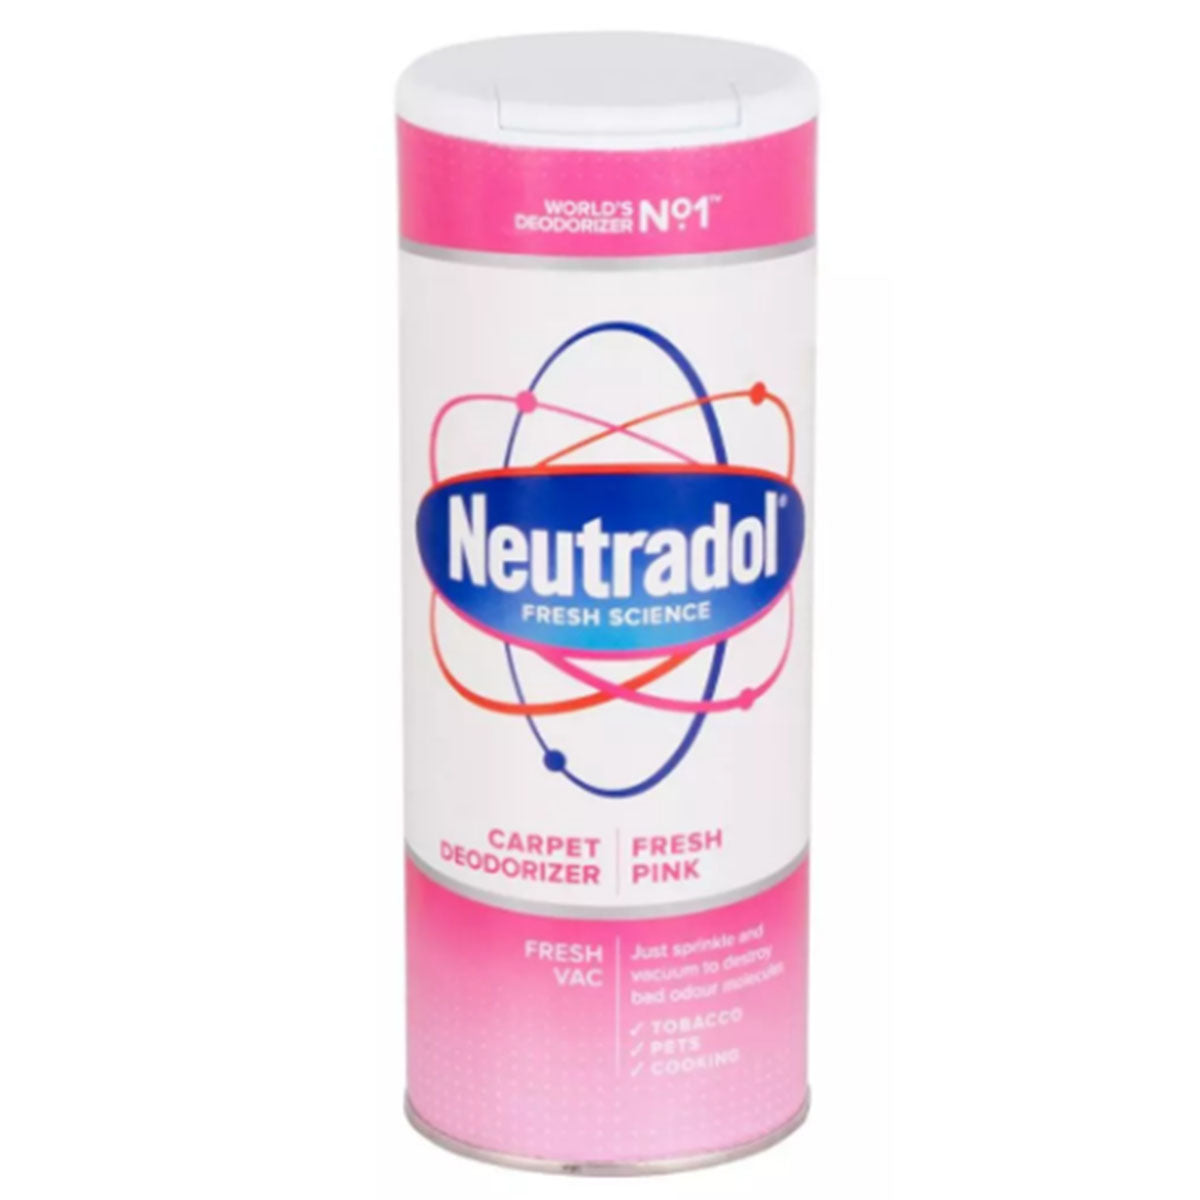 Neutradol - Fresh Pink Carpet Deodoriser - 350g - Continental Food Store